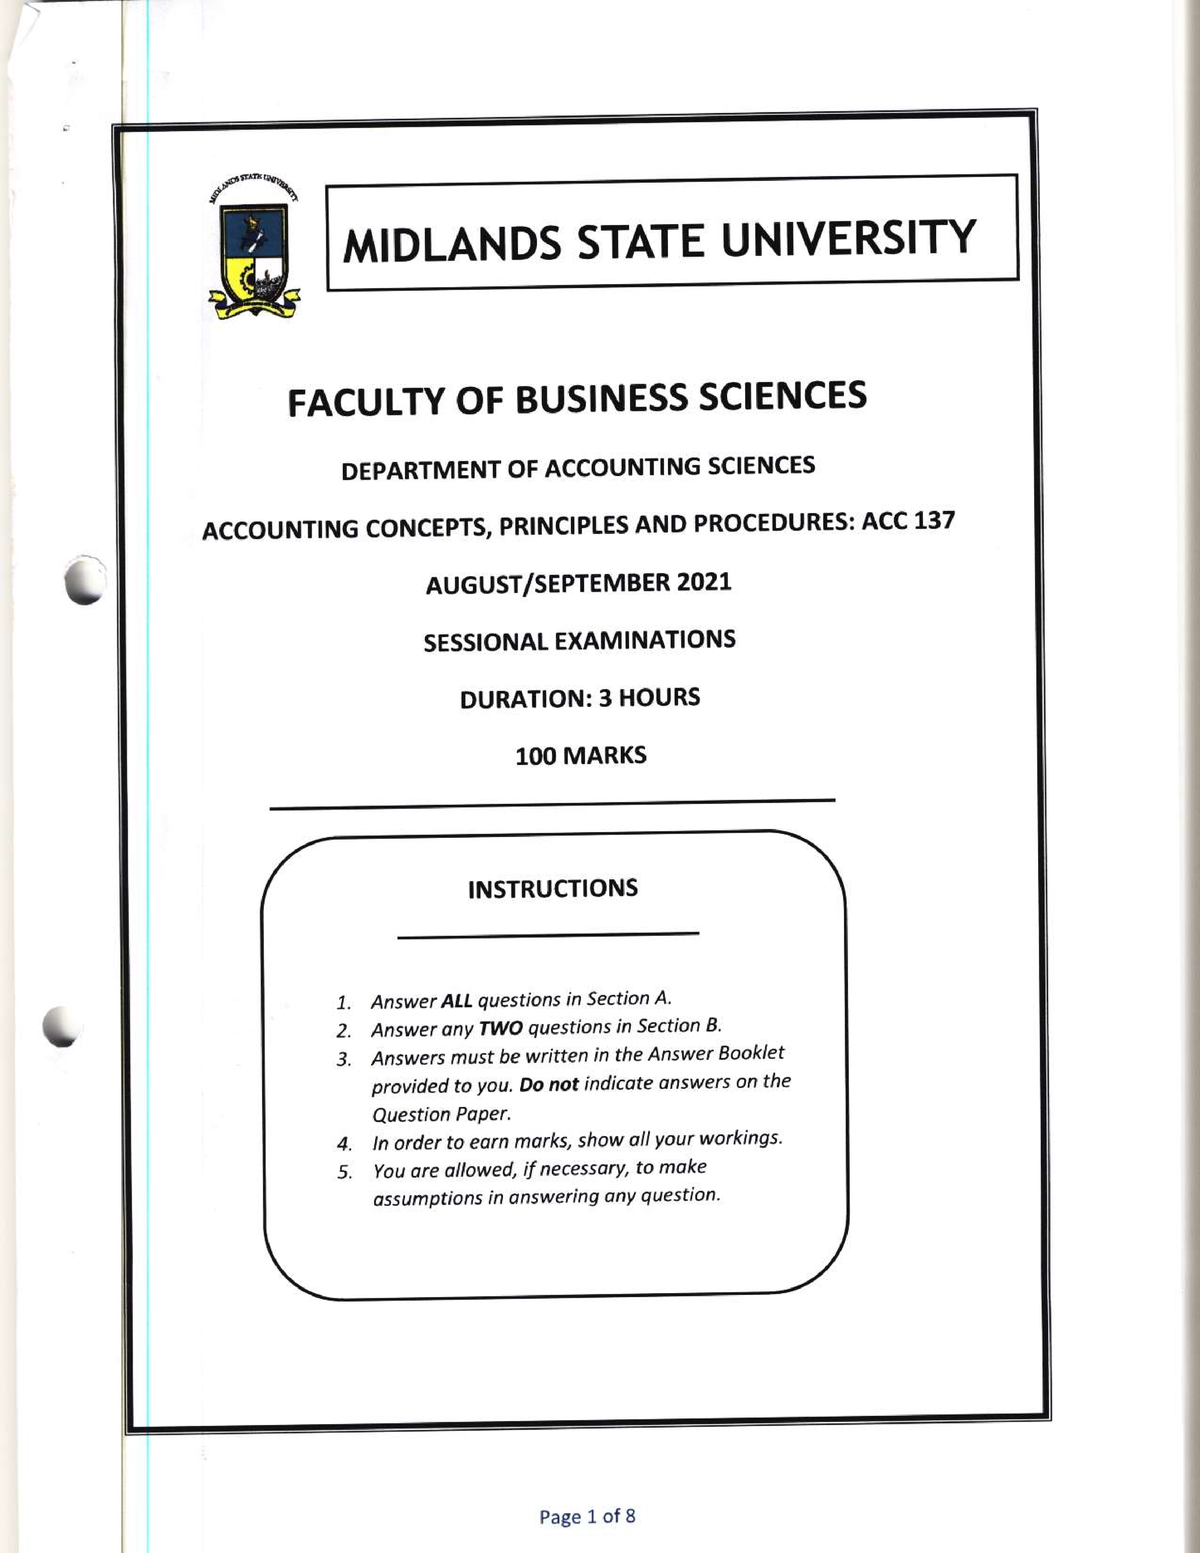 msu accounting dissertations